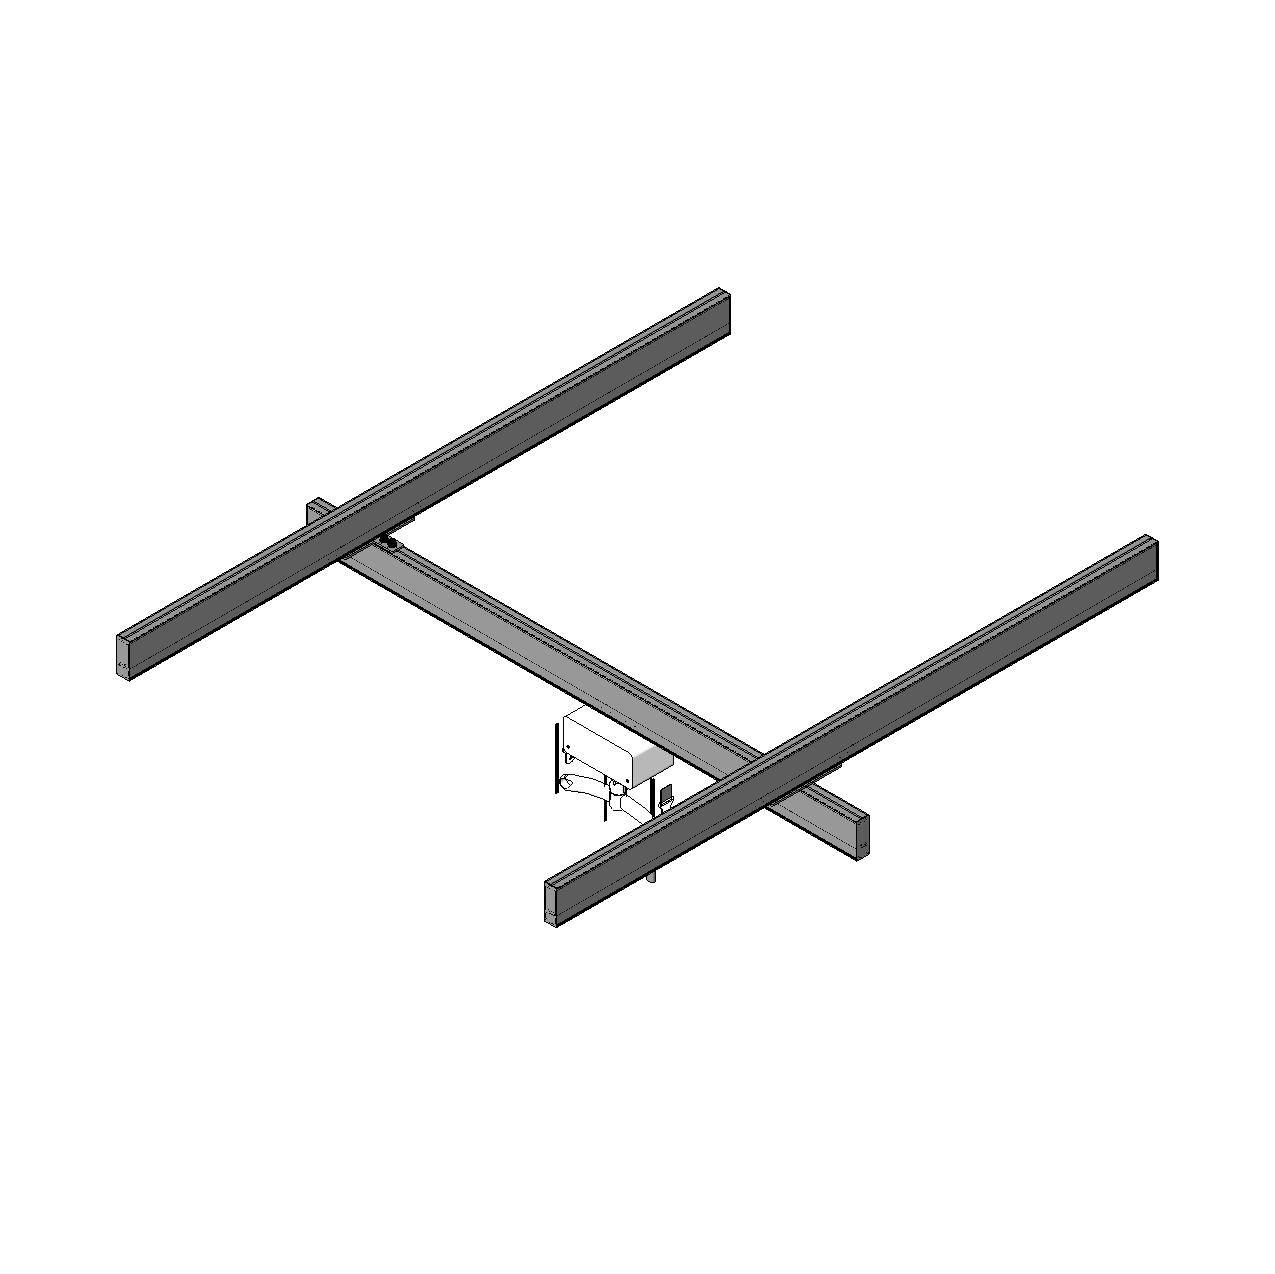 Ceiling Track Hoist - System Type I